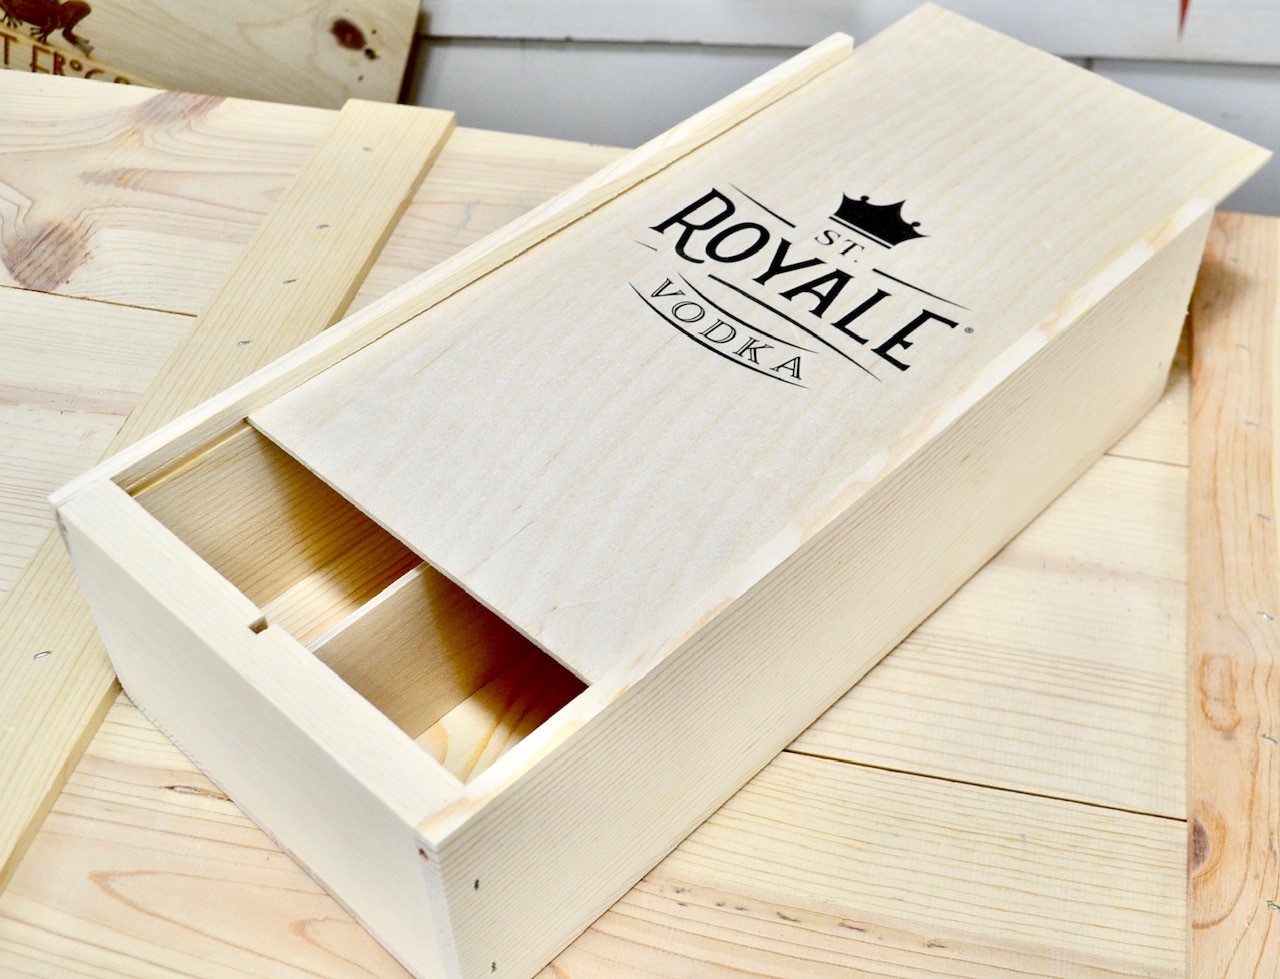 St Royale Vodka Wooden Box With a Sliding Box